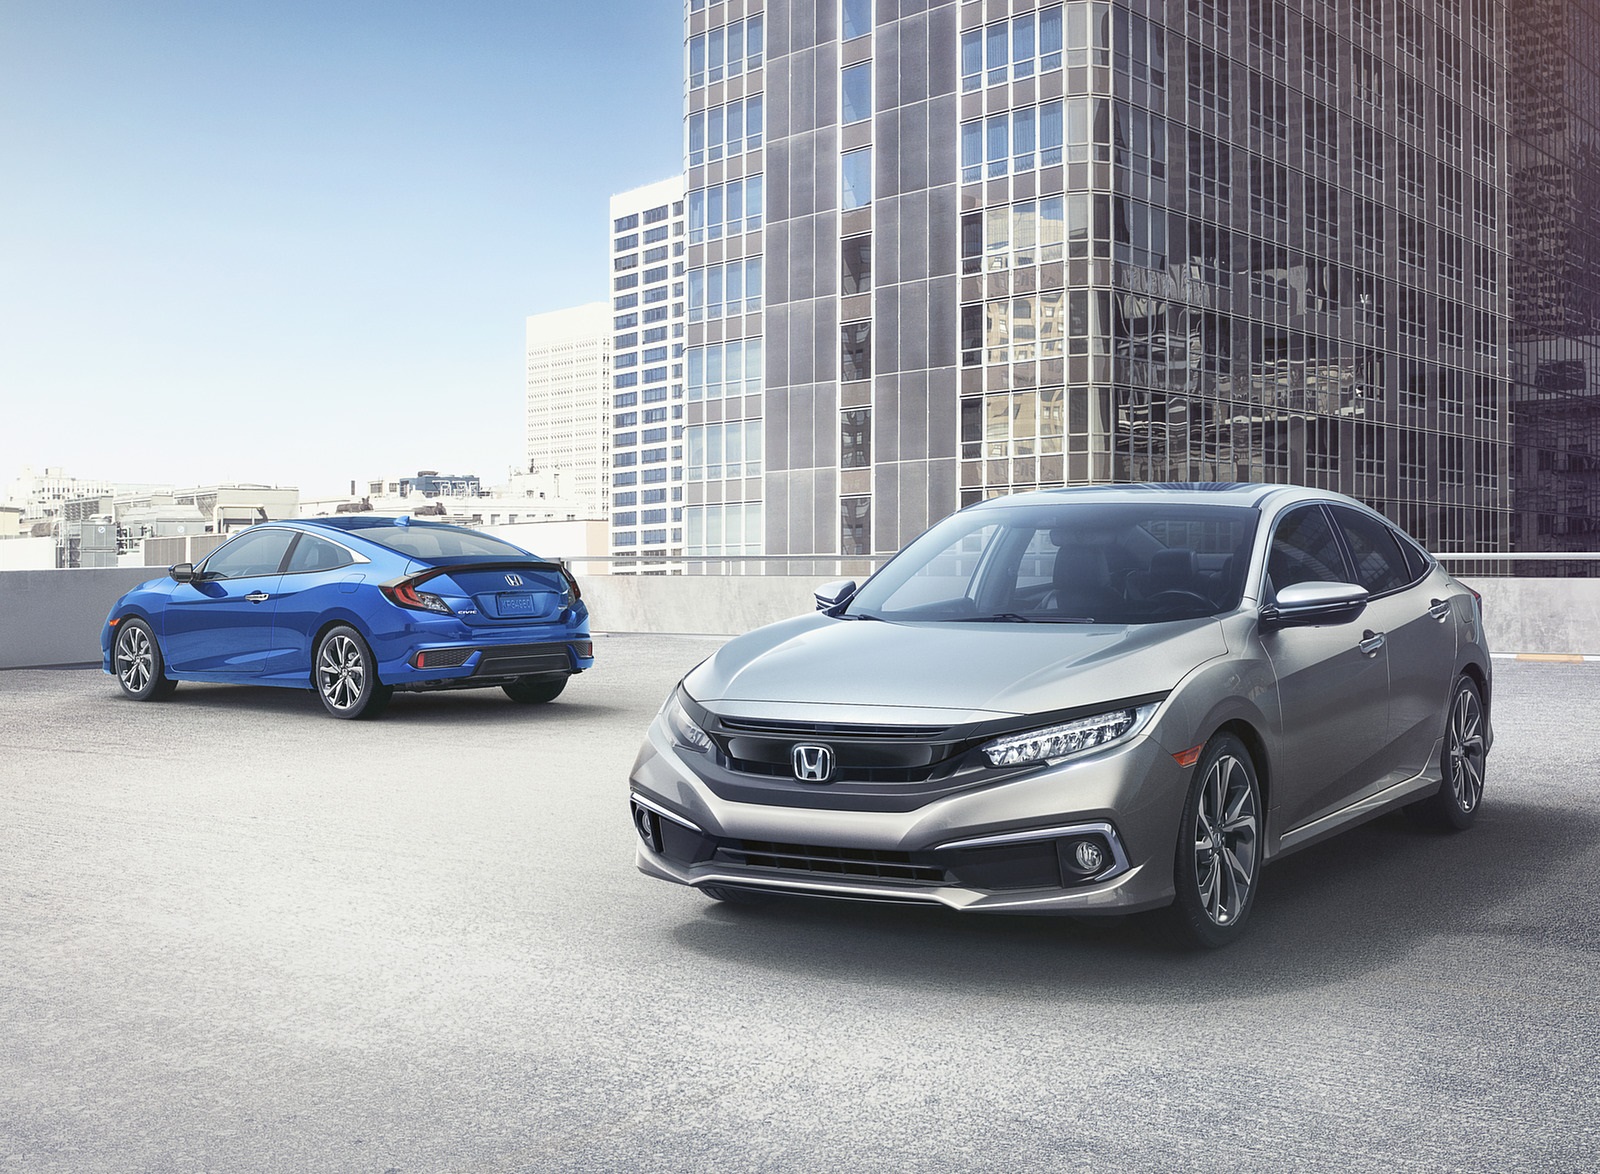 2019 Honda Civic Sedan and Coupe Wallpapers (6)